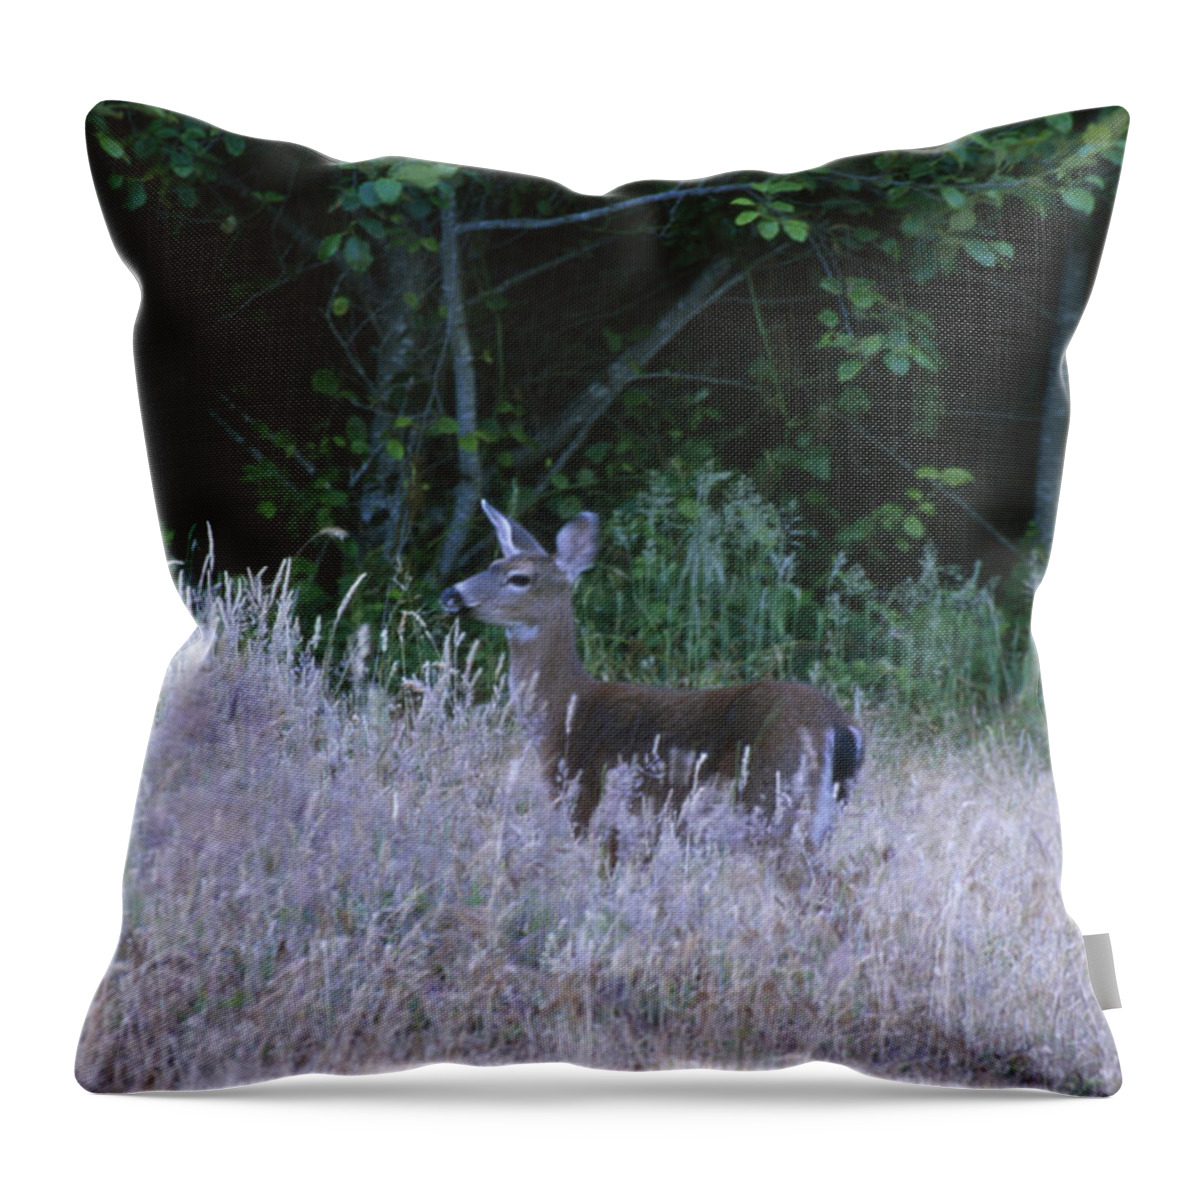 Mule Deer Throw Pillow featuring the photograph Mule Deer - Sinkyone Wilderness by Soli Deo Gloria Wilderness And Wildlife Photography